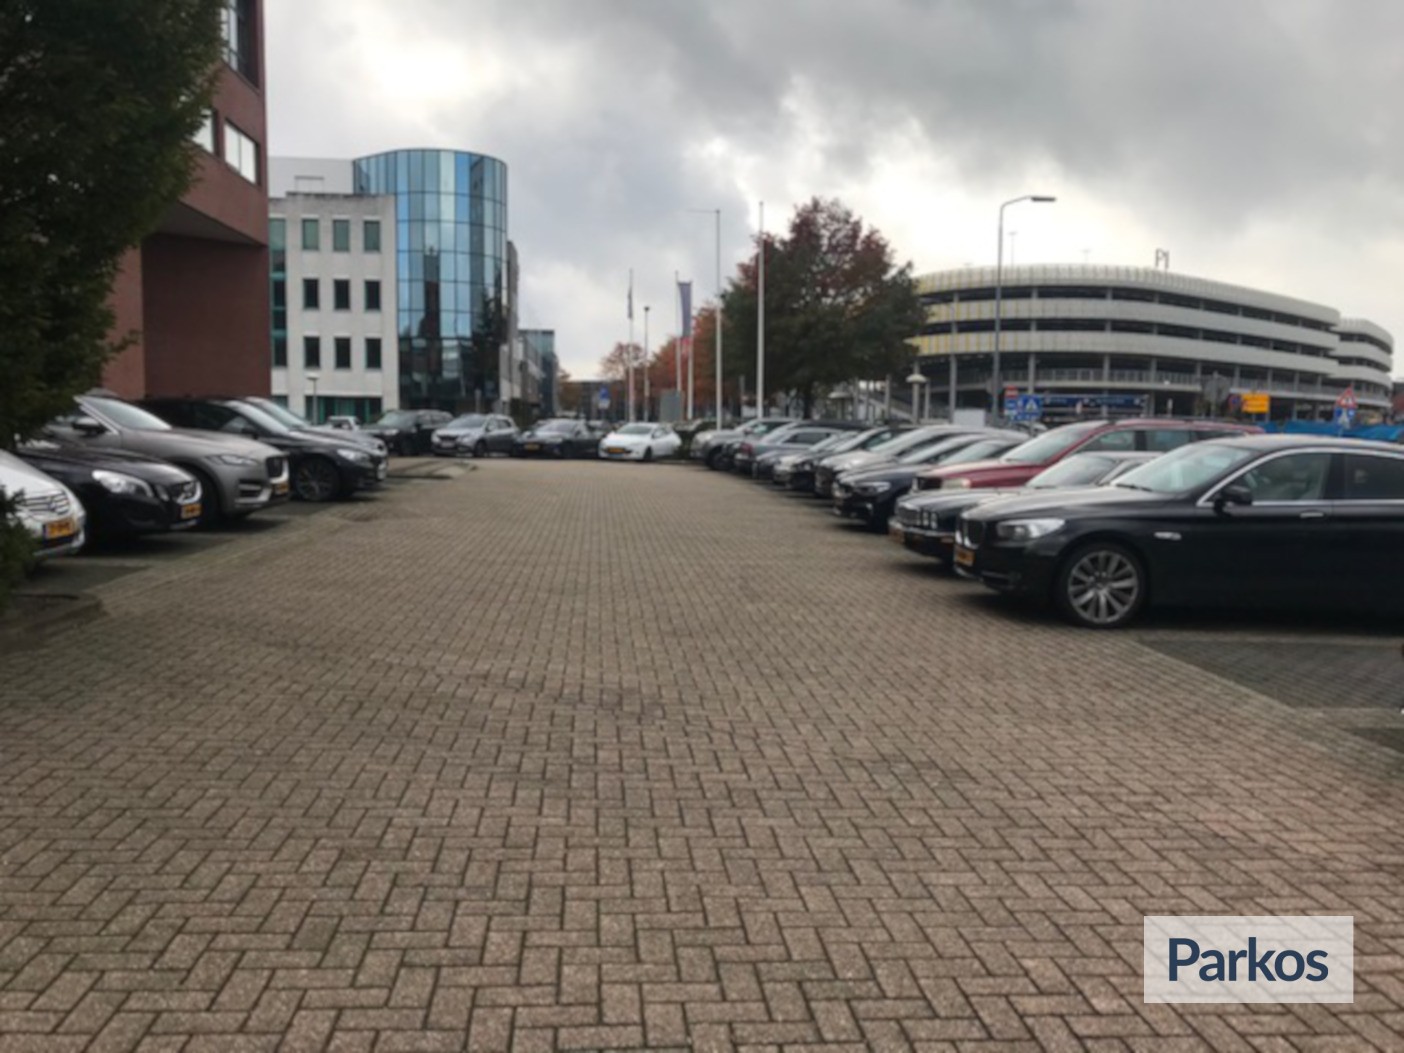 Euro-Parking - Parking Aeroport Eindhoven - picture 1